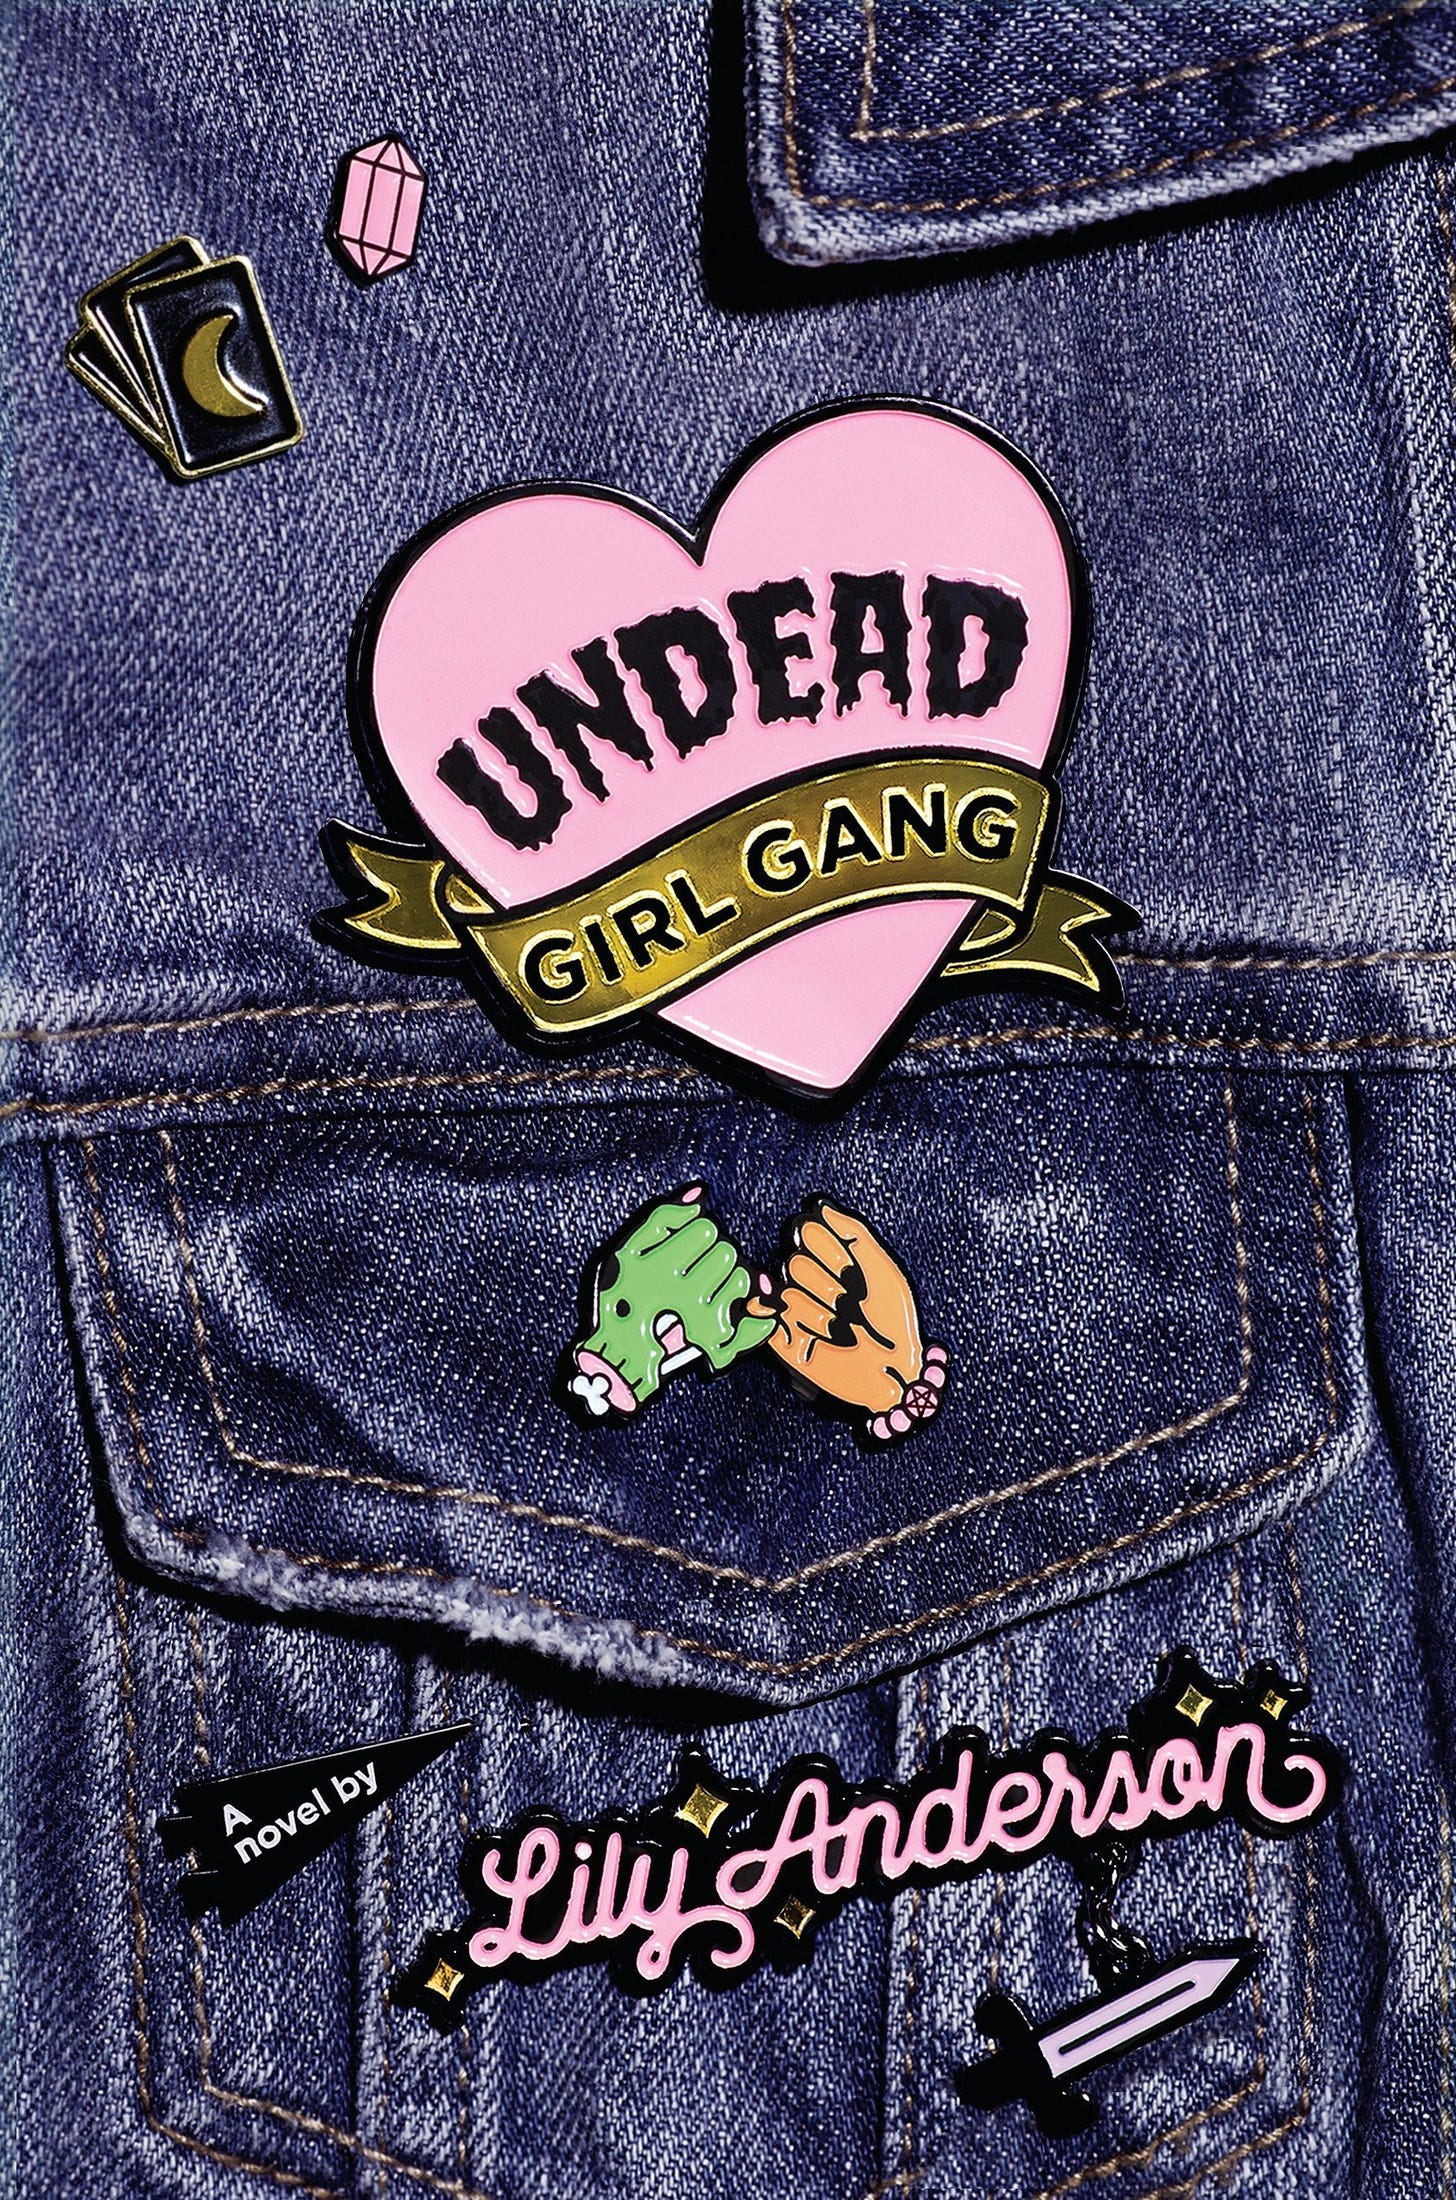 Image result for undead girl gang